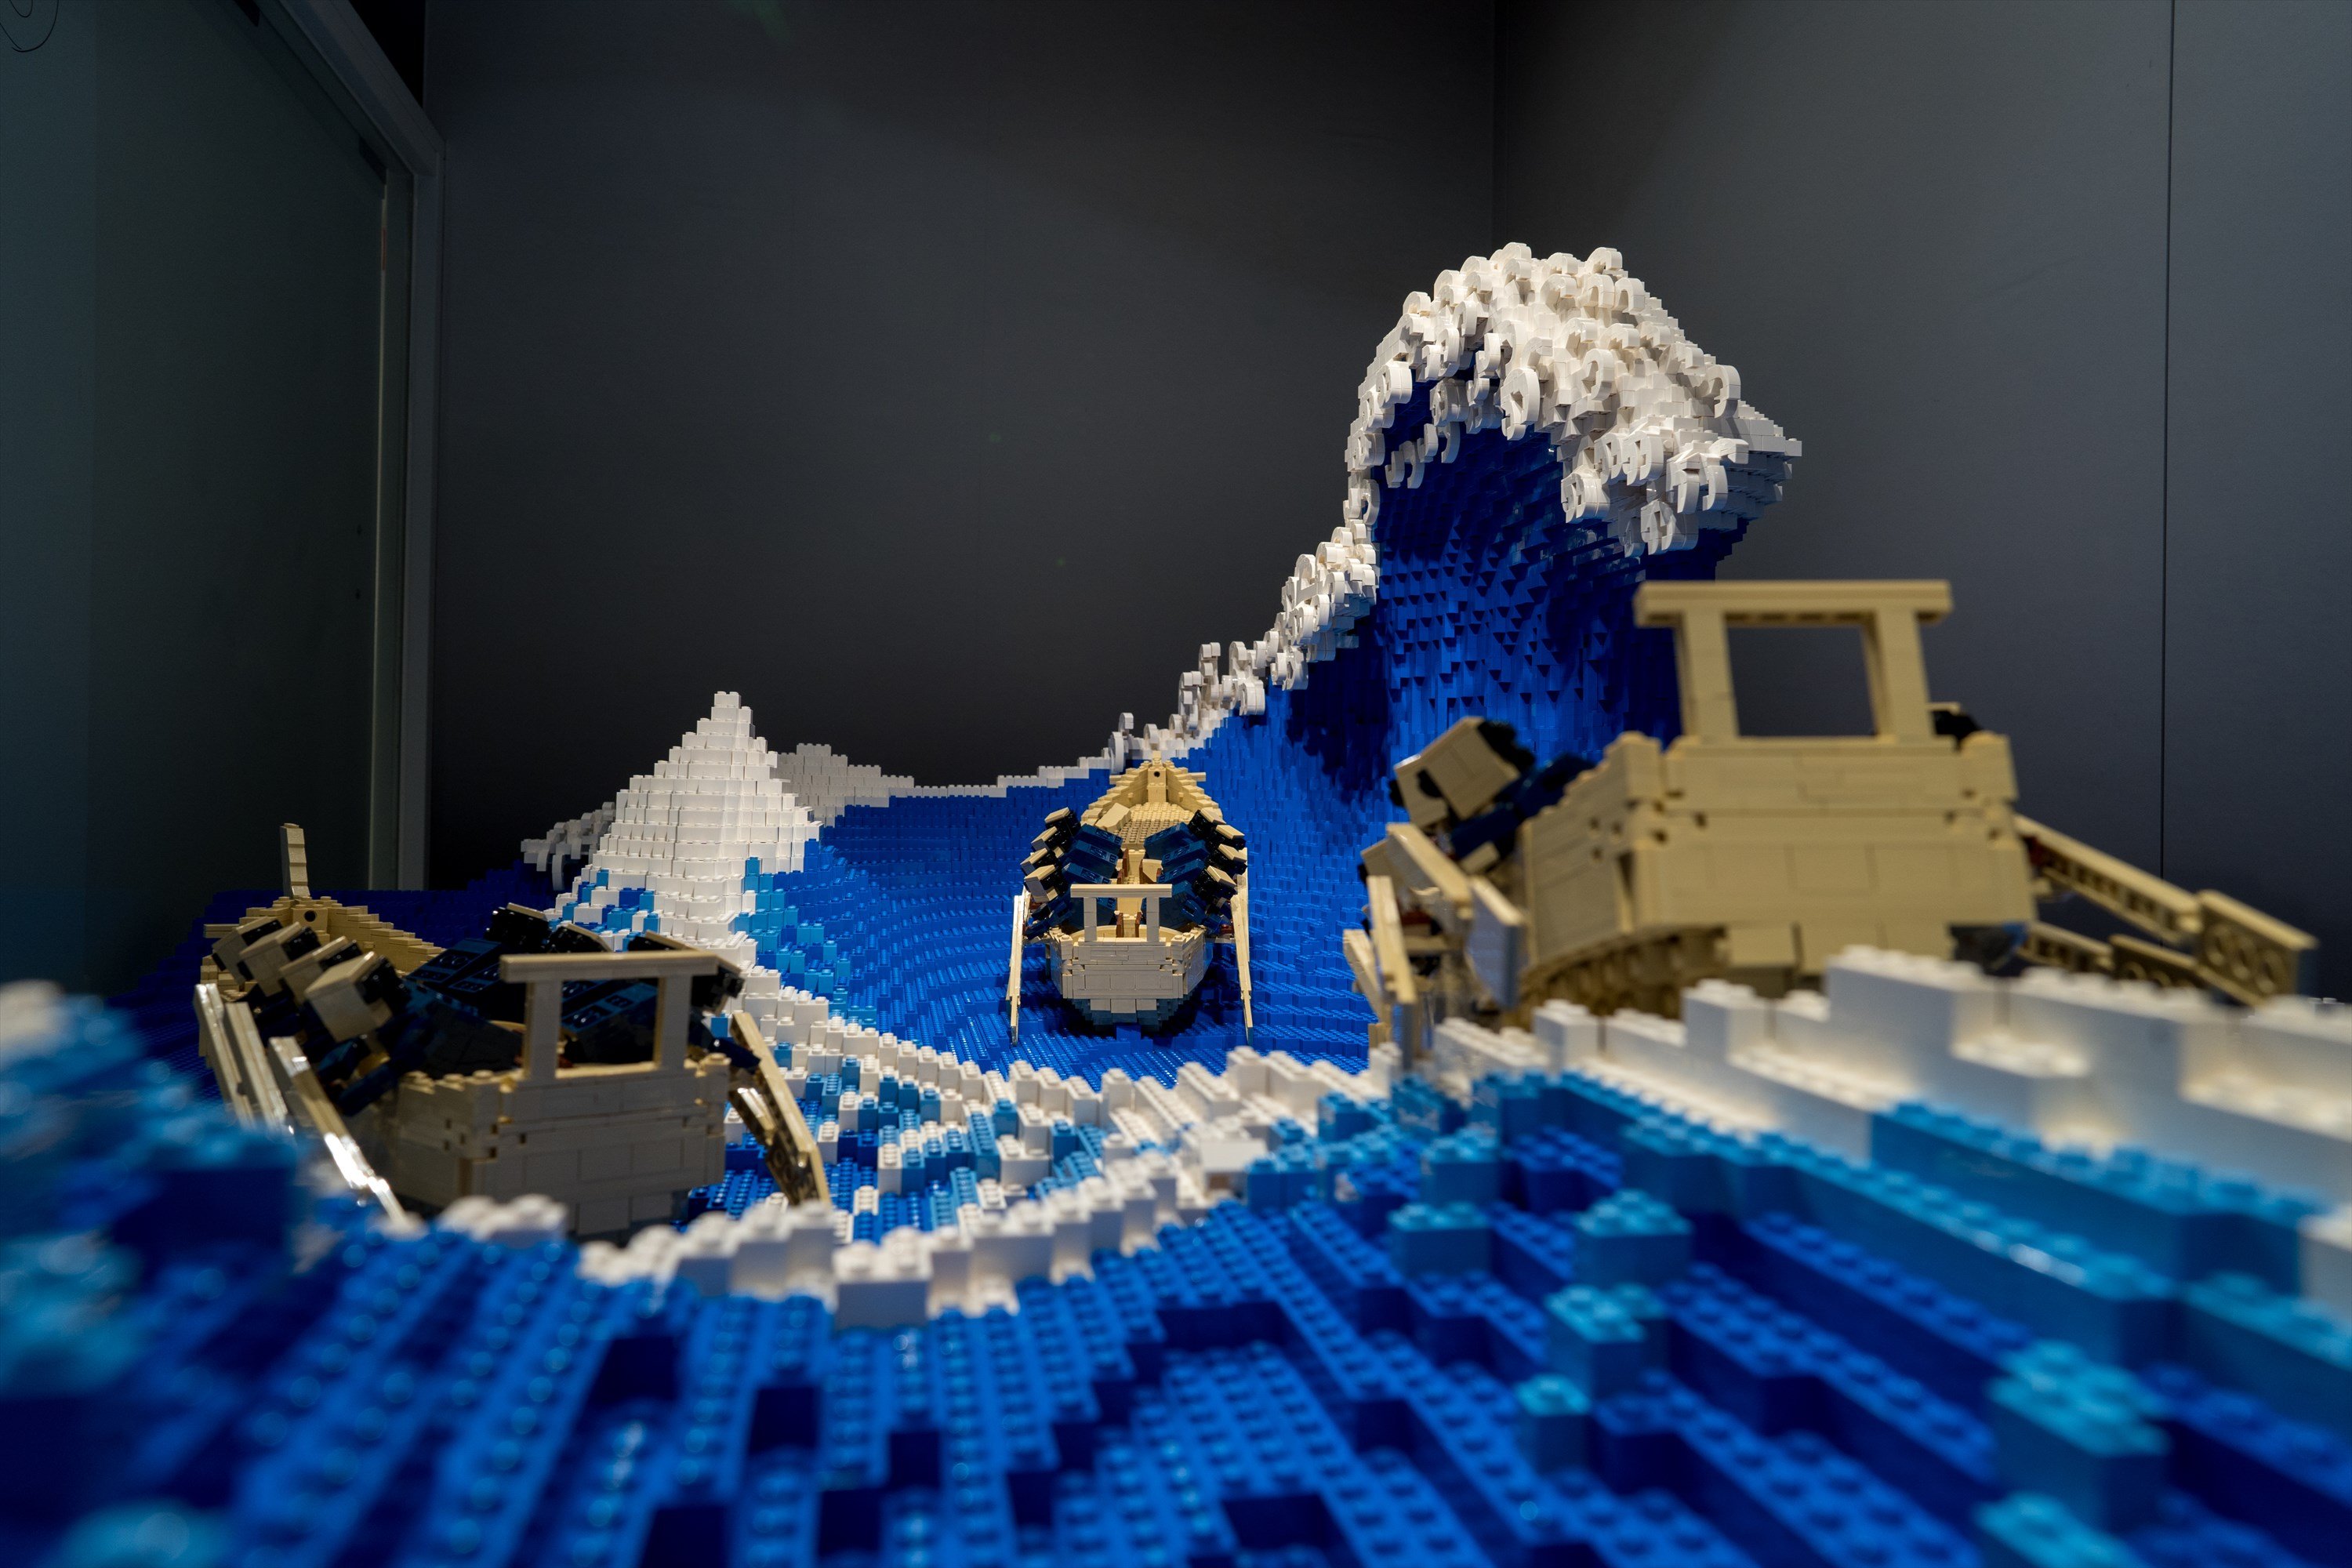 Tableau 2x3 'La grande vague de Kanagawa' - Pièce LEGO® customisée - Super  Briques